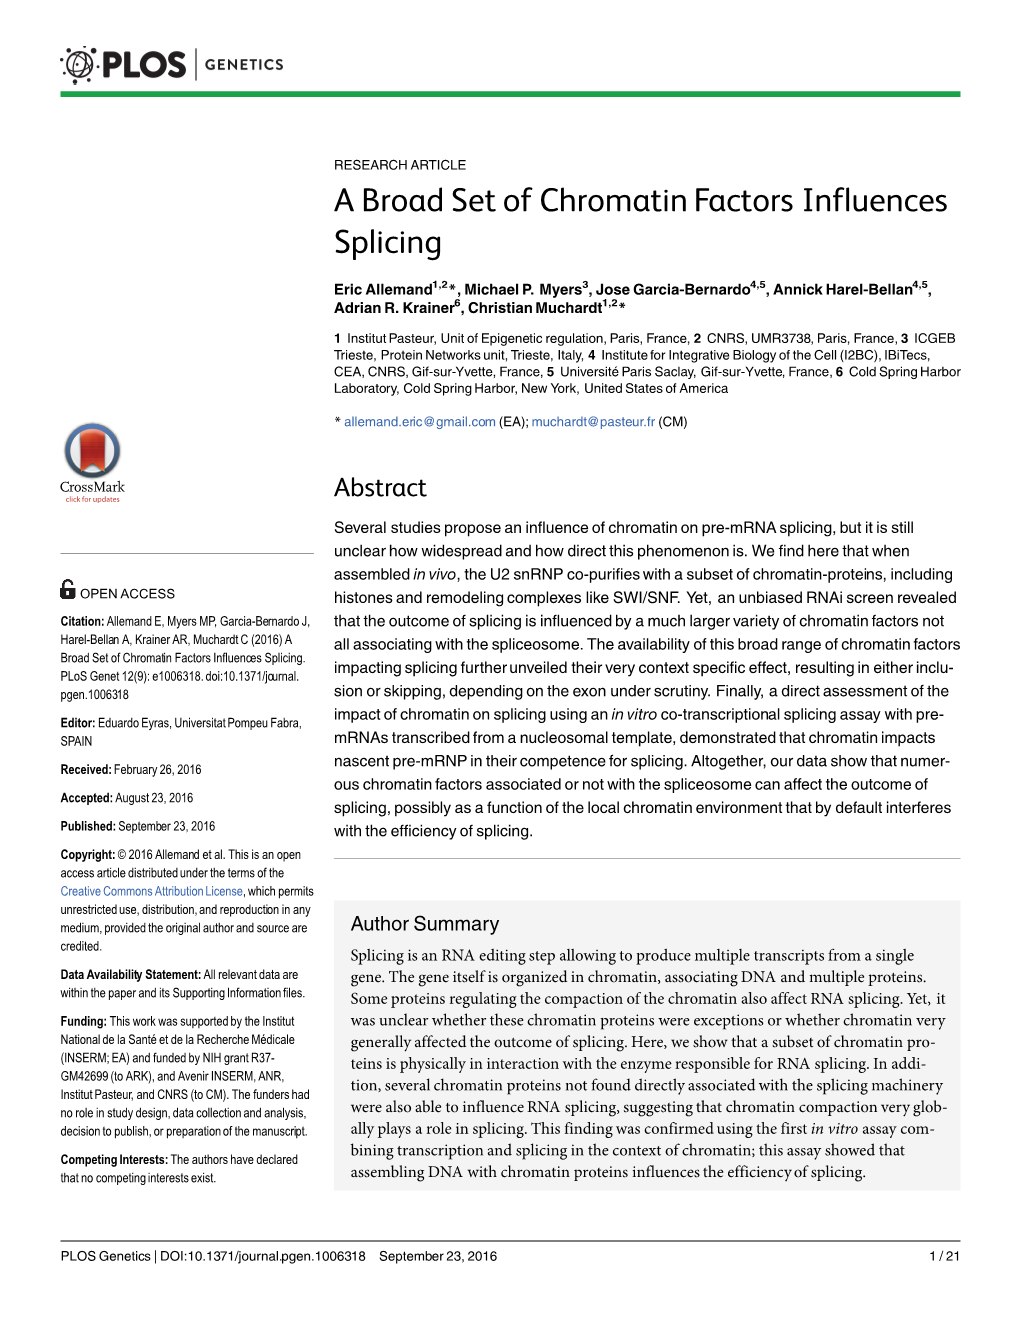 A Broad Set of Chromatin Factors Influences Splicing